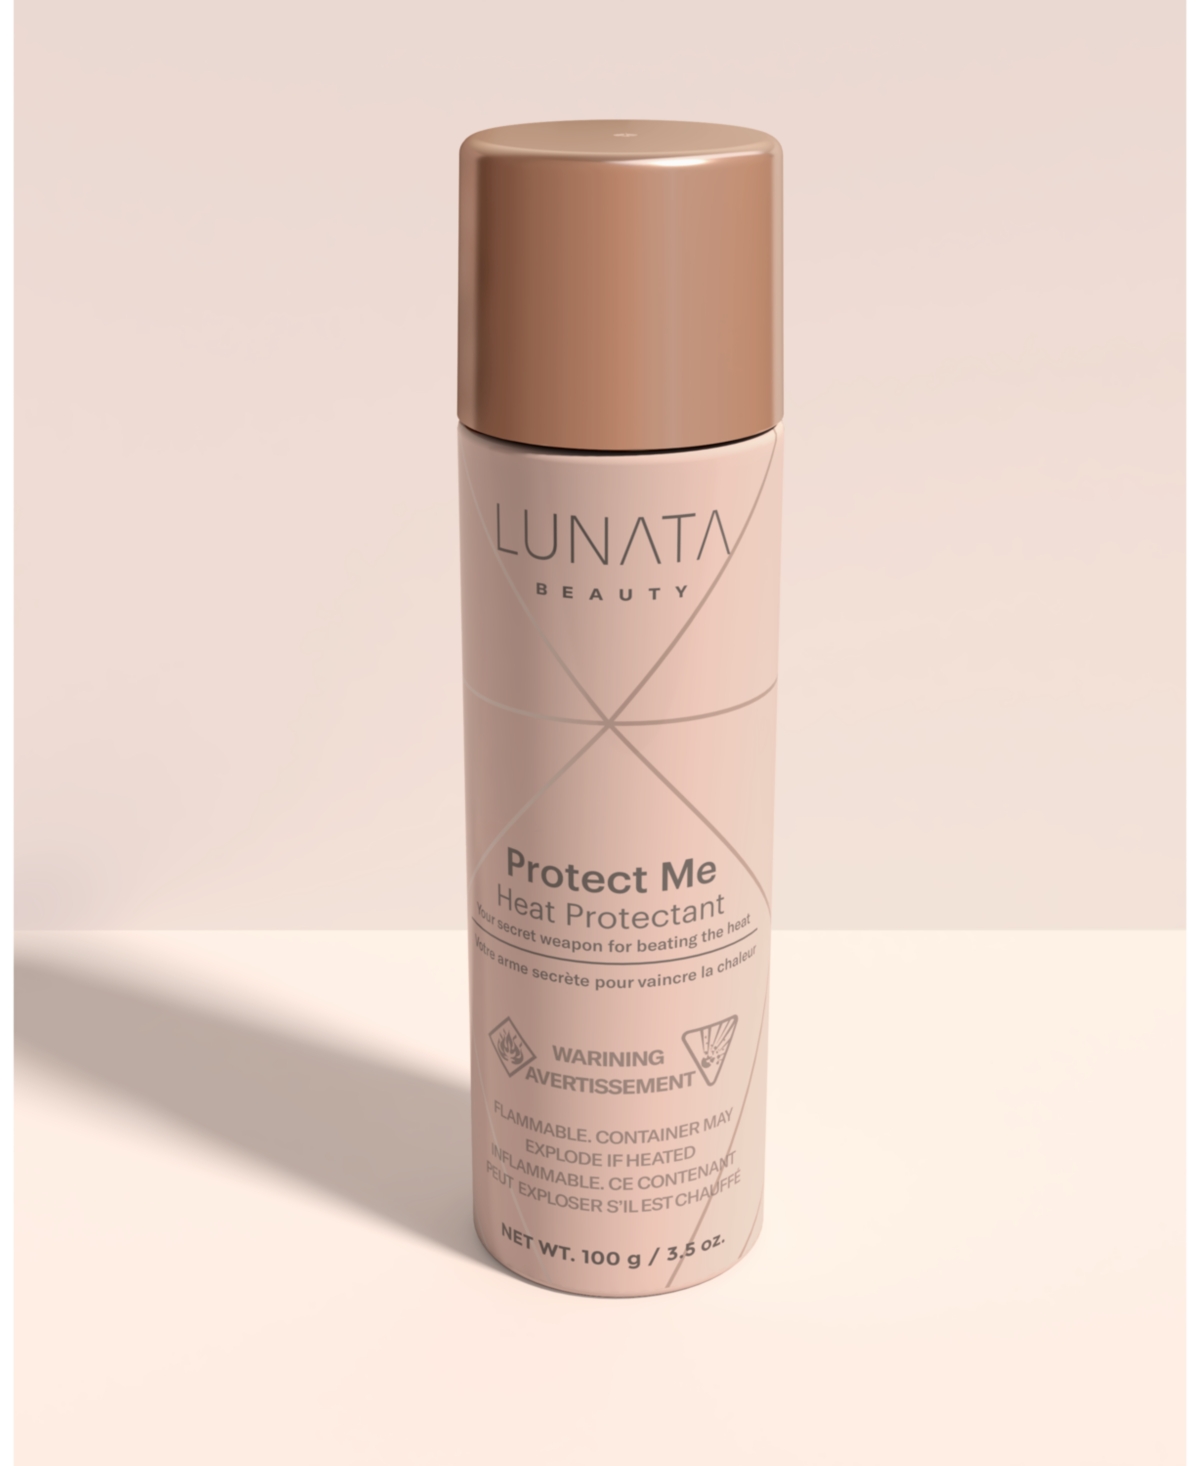 Lunata Protect Me Heat Protectant, 3.5 oz